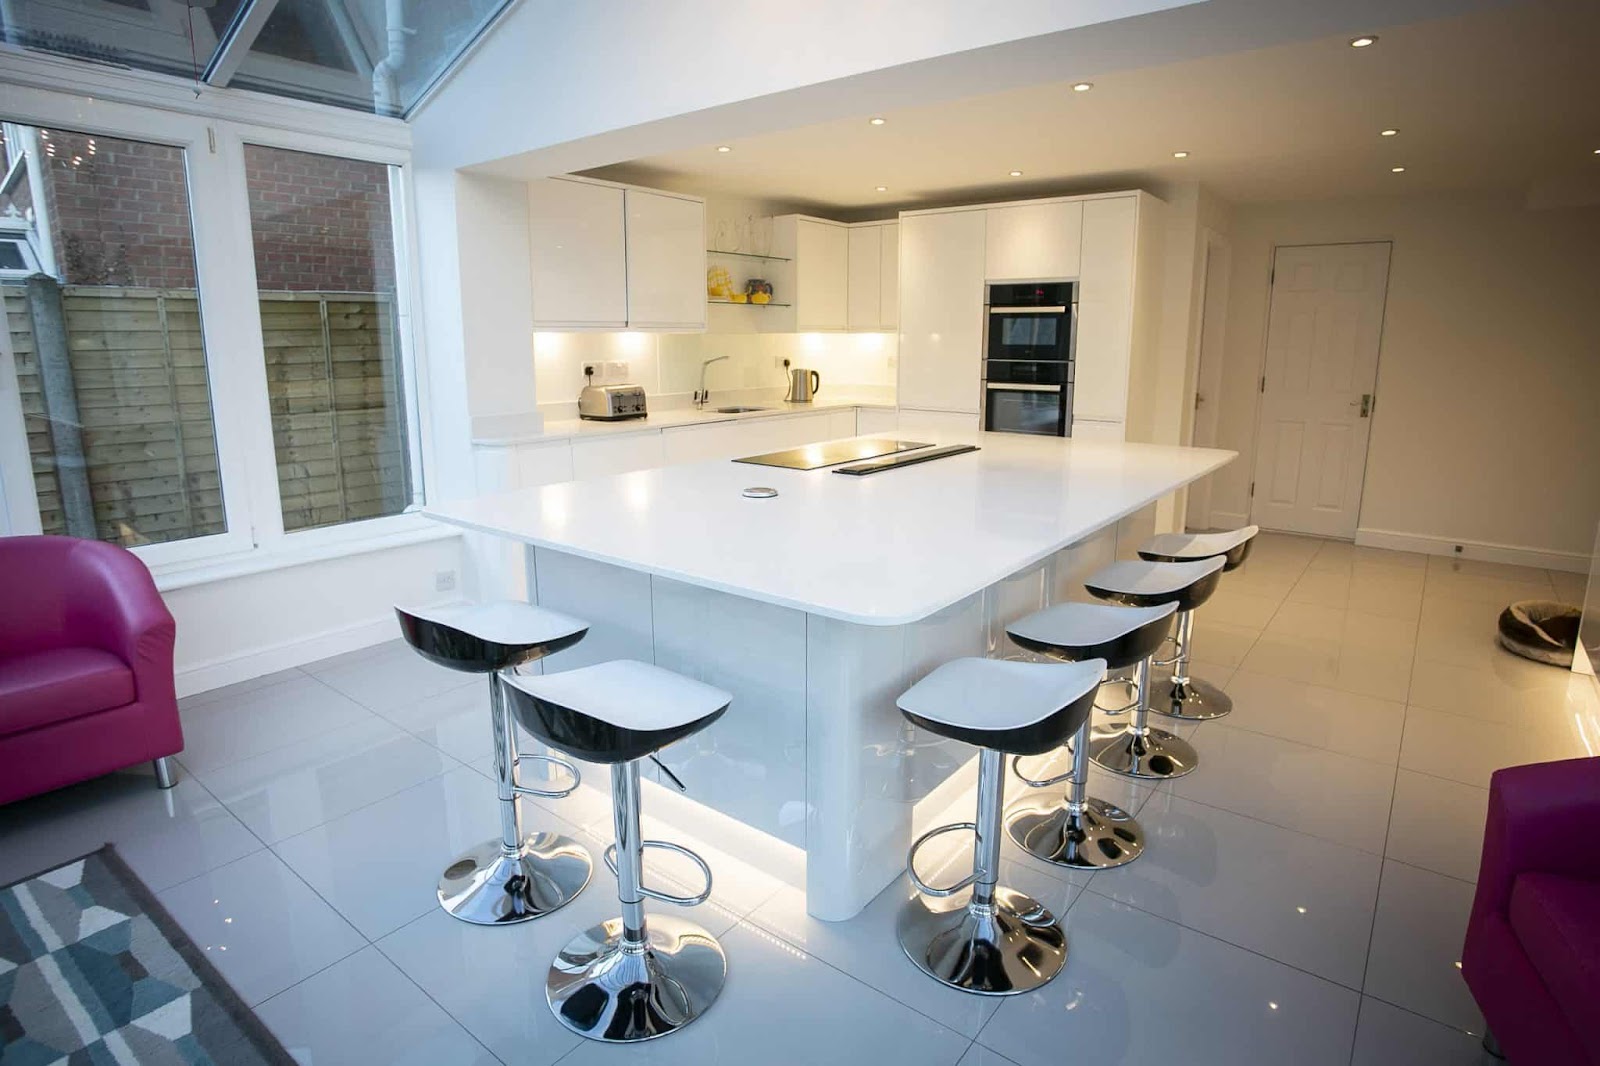 kitchen flooring ideas; a white kitchen with a massive kitchen island